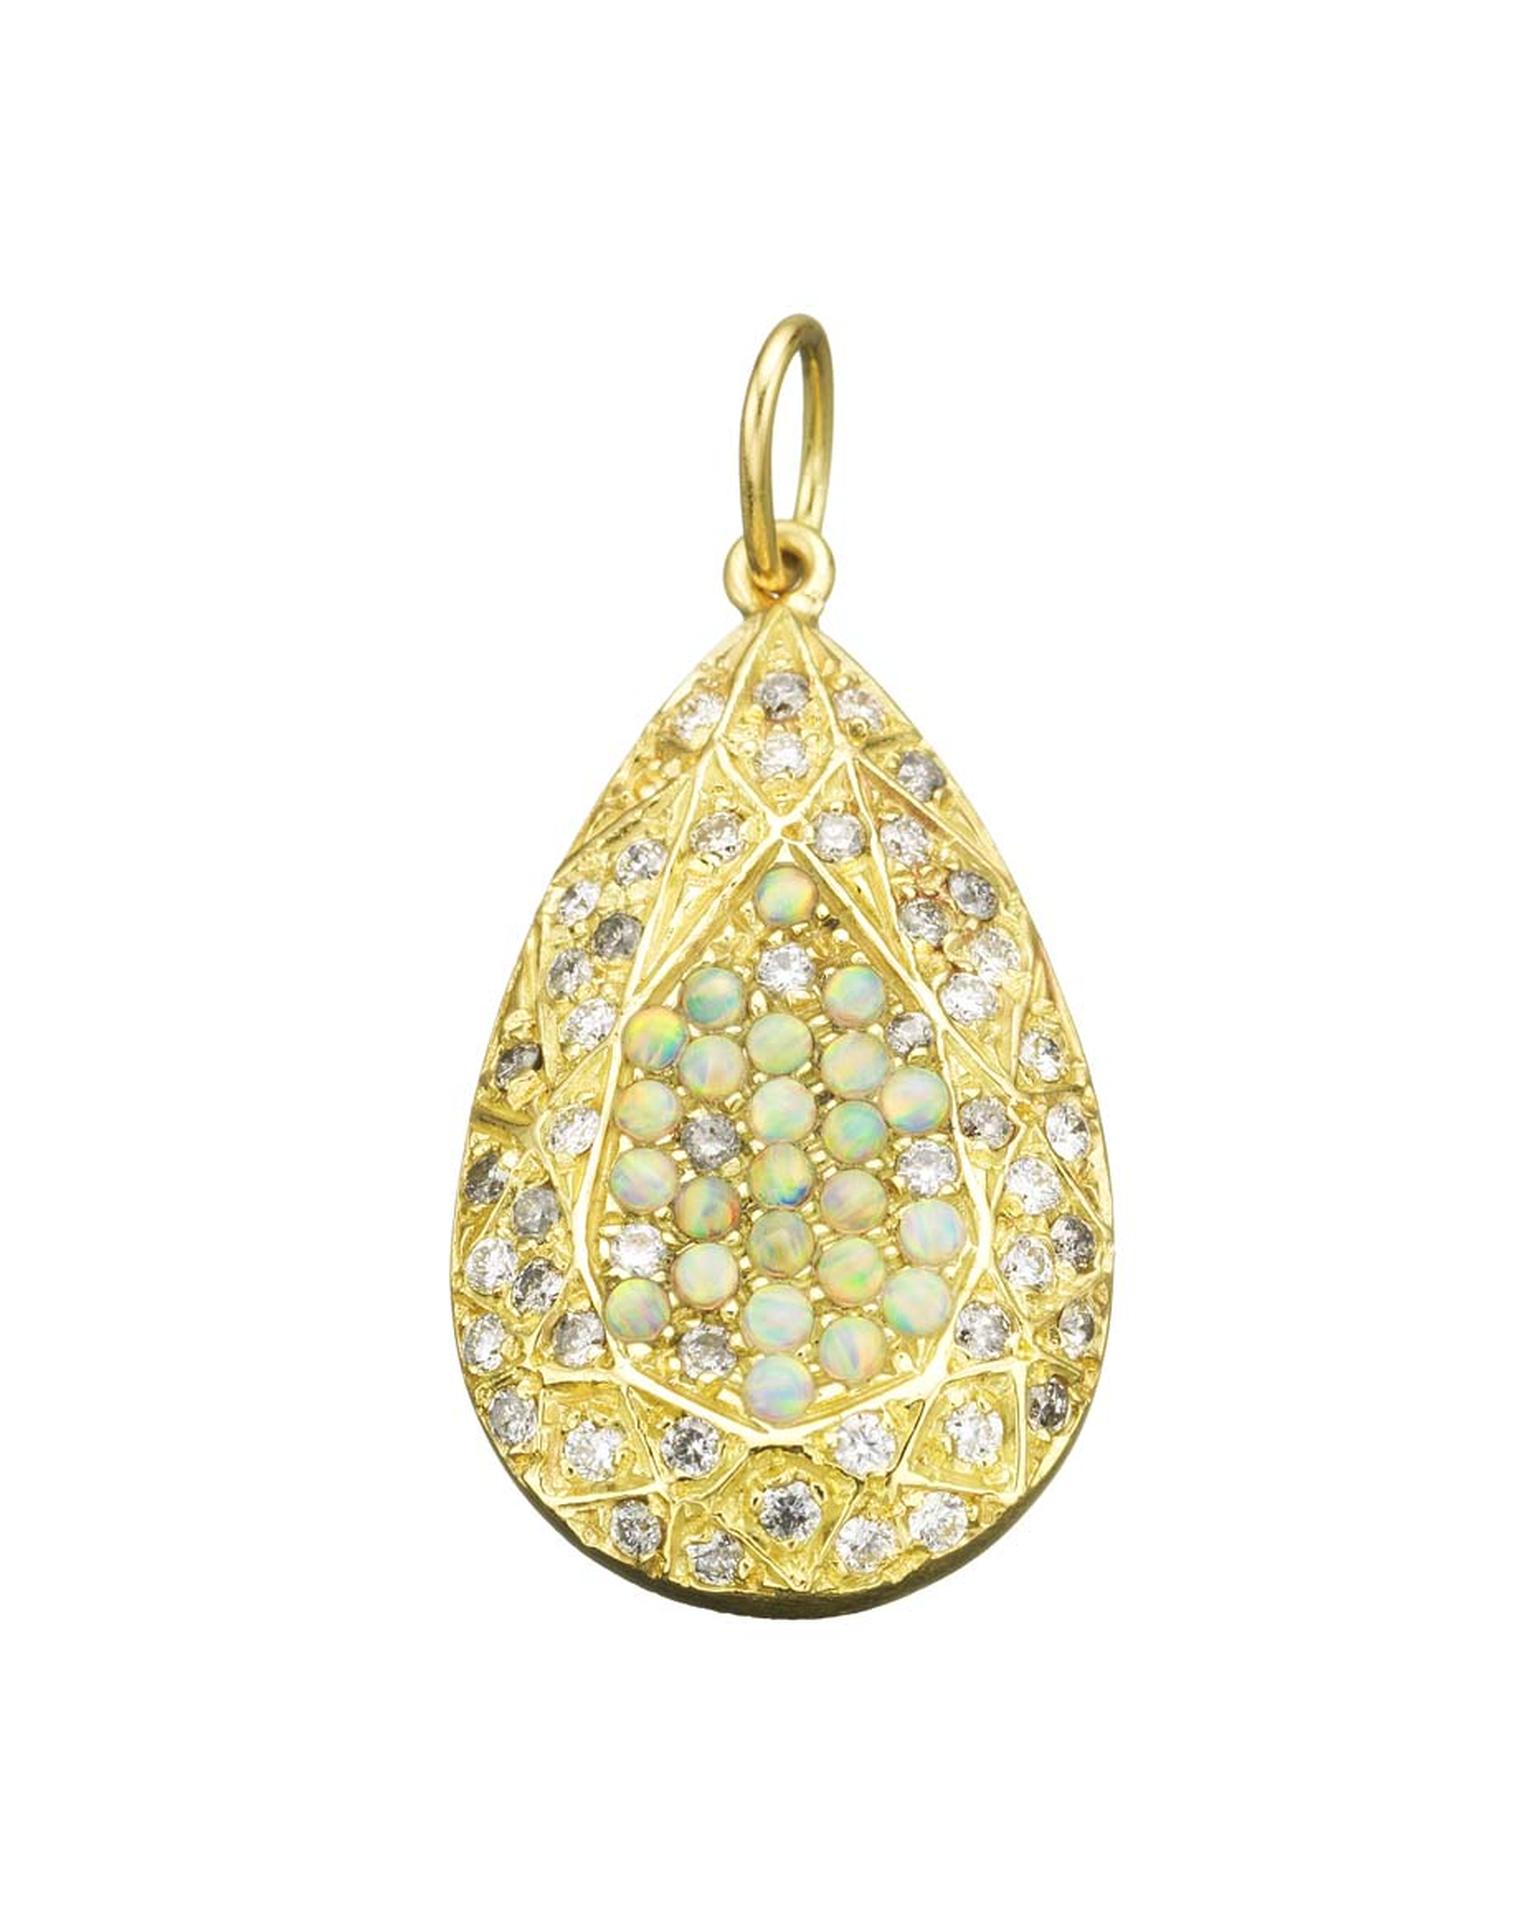 Carolina Bucci Looking Glass opal pendant.